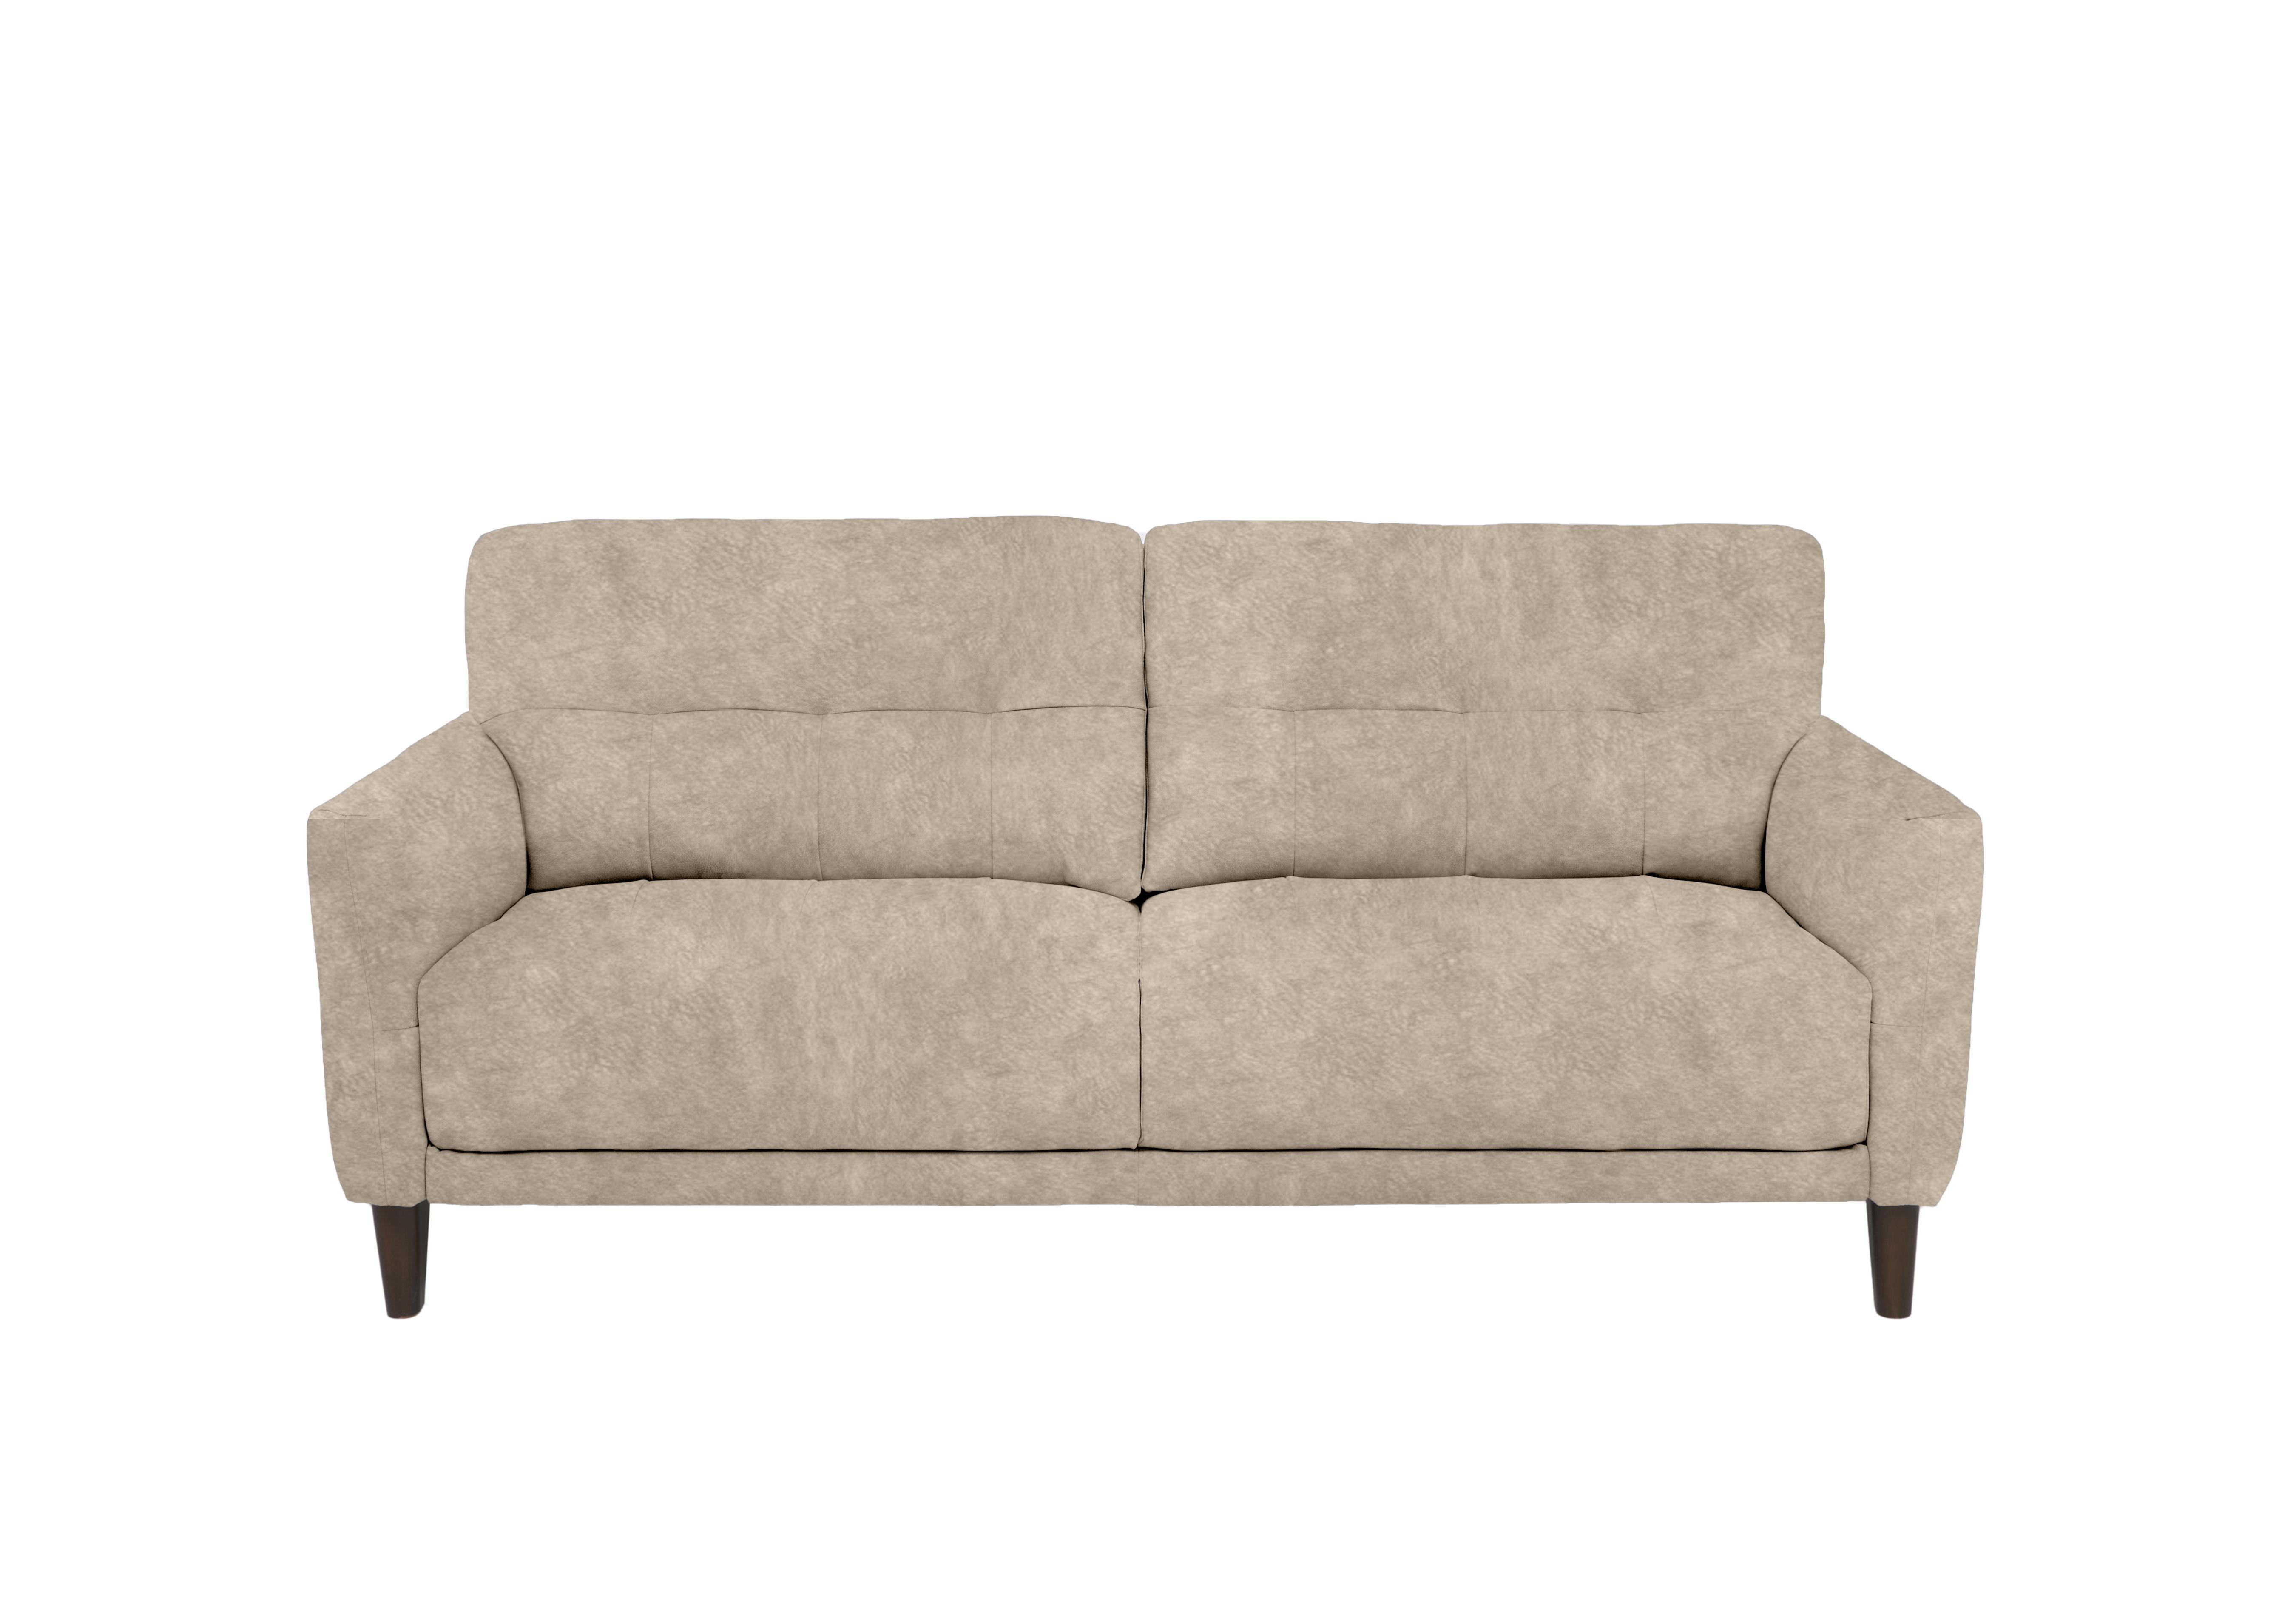 Uno Fabric 3 Seater Sofa in Bfa-Bnn-R26 Cream on Furniture Village